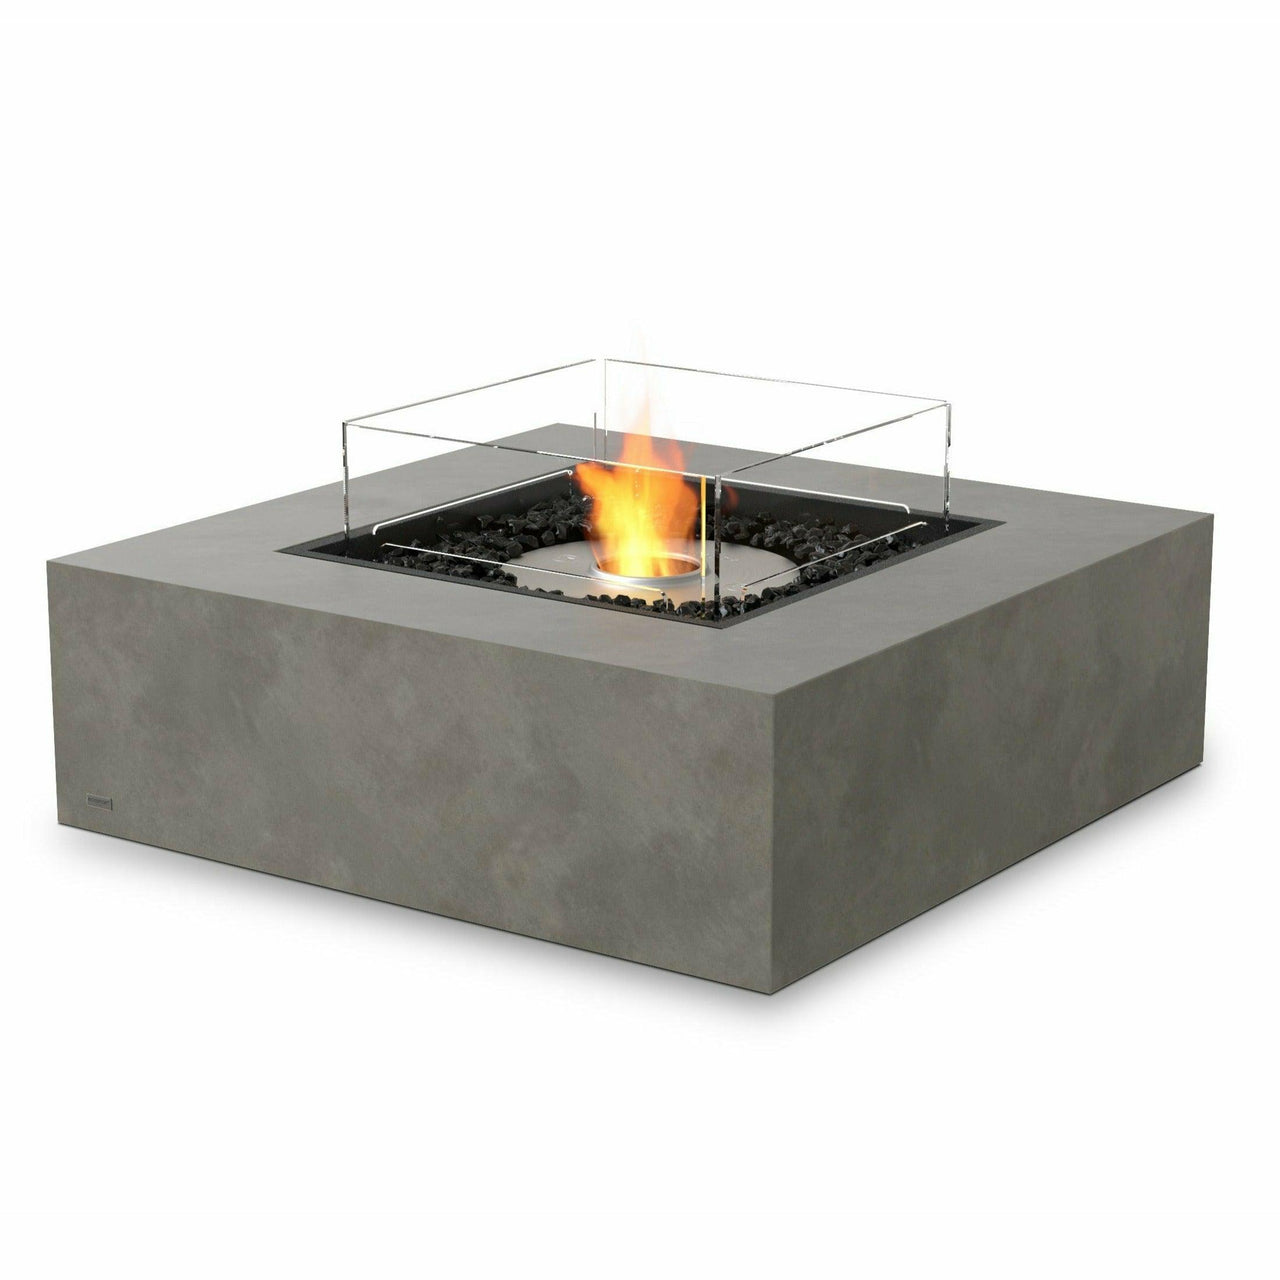 EcoSmart Fire - Base 40" Square Concrete Fire Pit Table - Fire Pit Stock